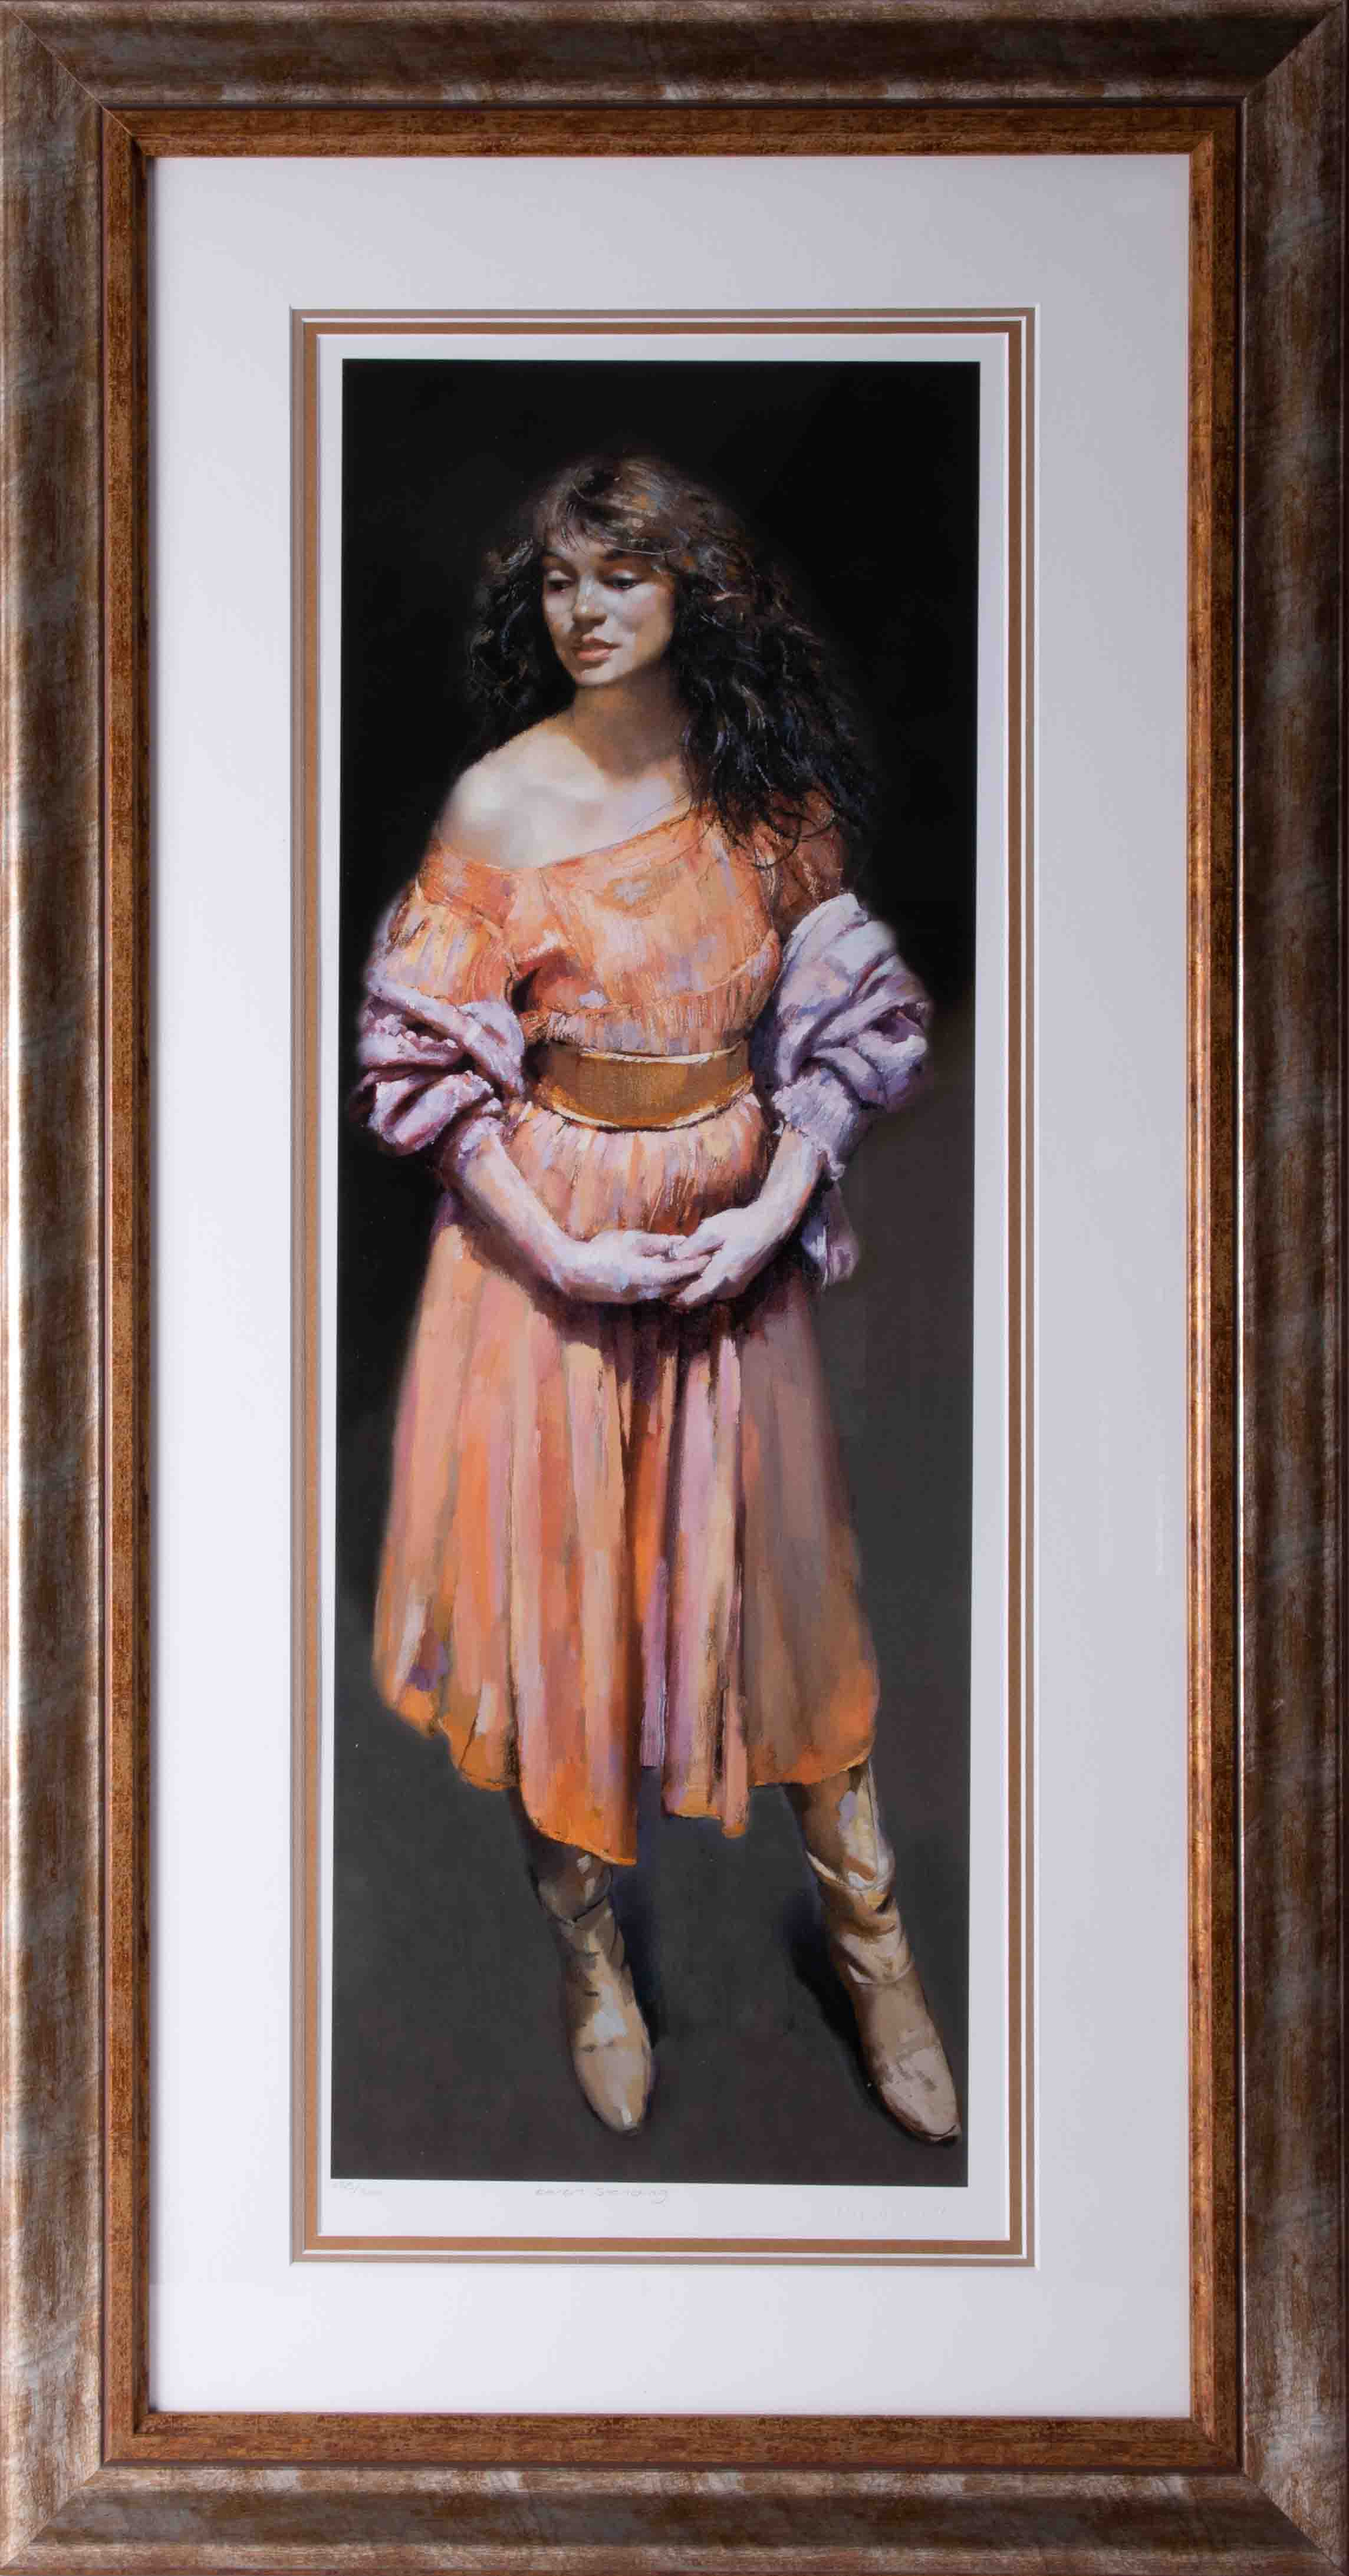 Robert Lenkiewicz, 'Karen Standing', signed edition print 455/500, 73cm x 25cm, framed and glazed,